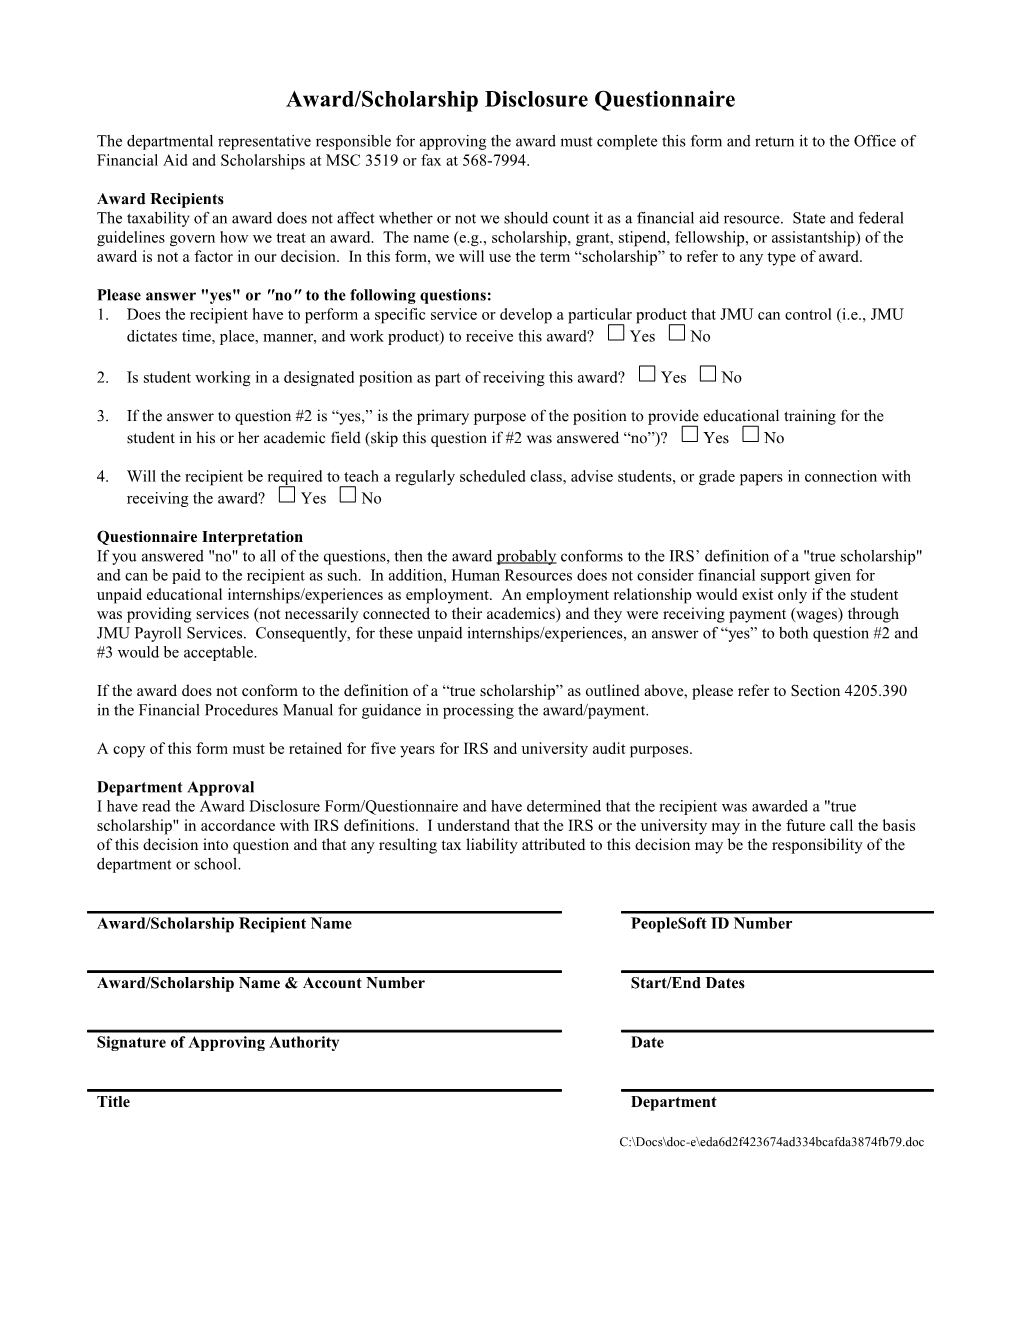 Fellowship Disclosure Form/Questionnaire